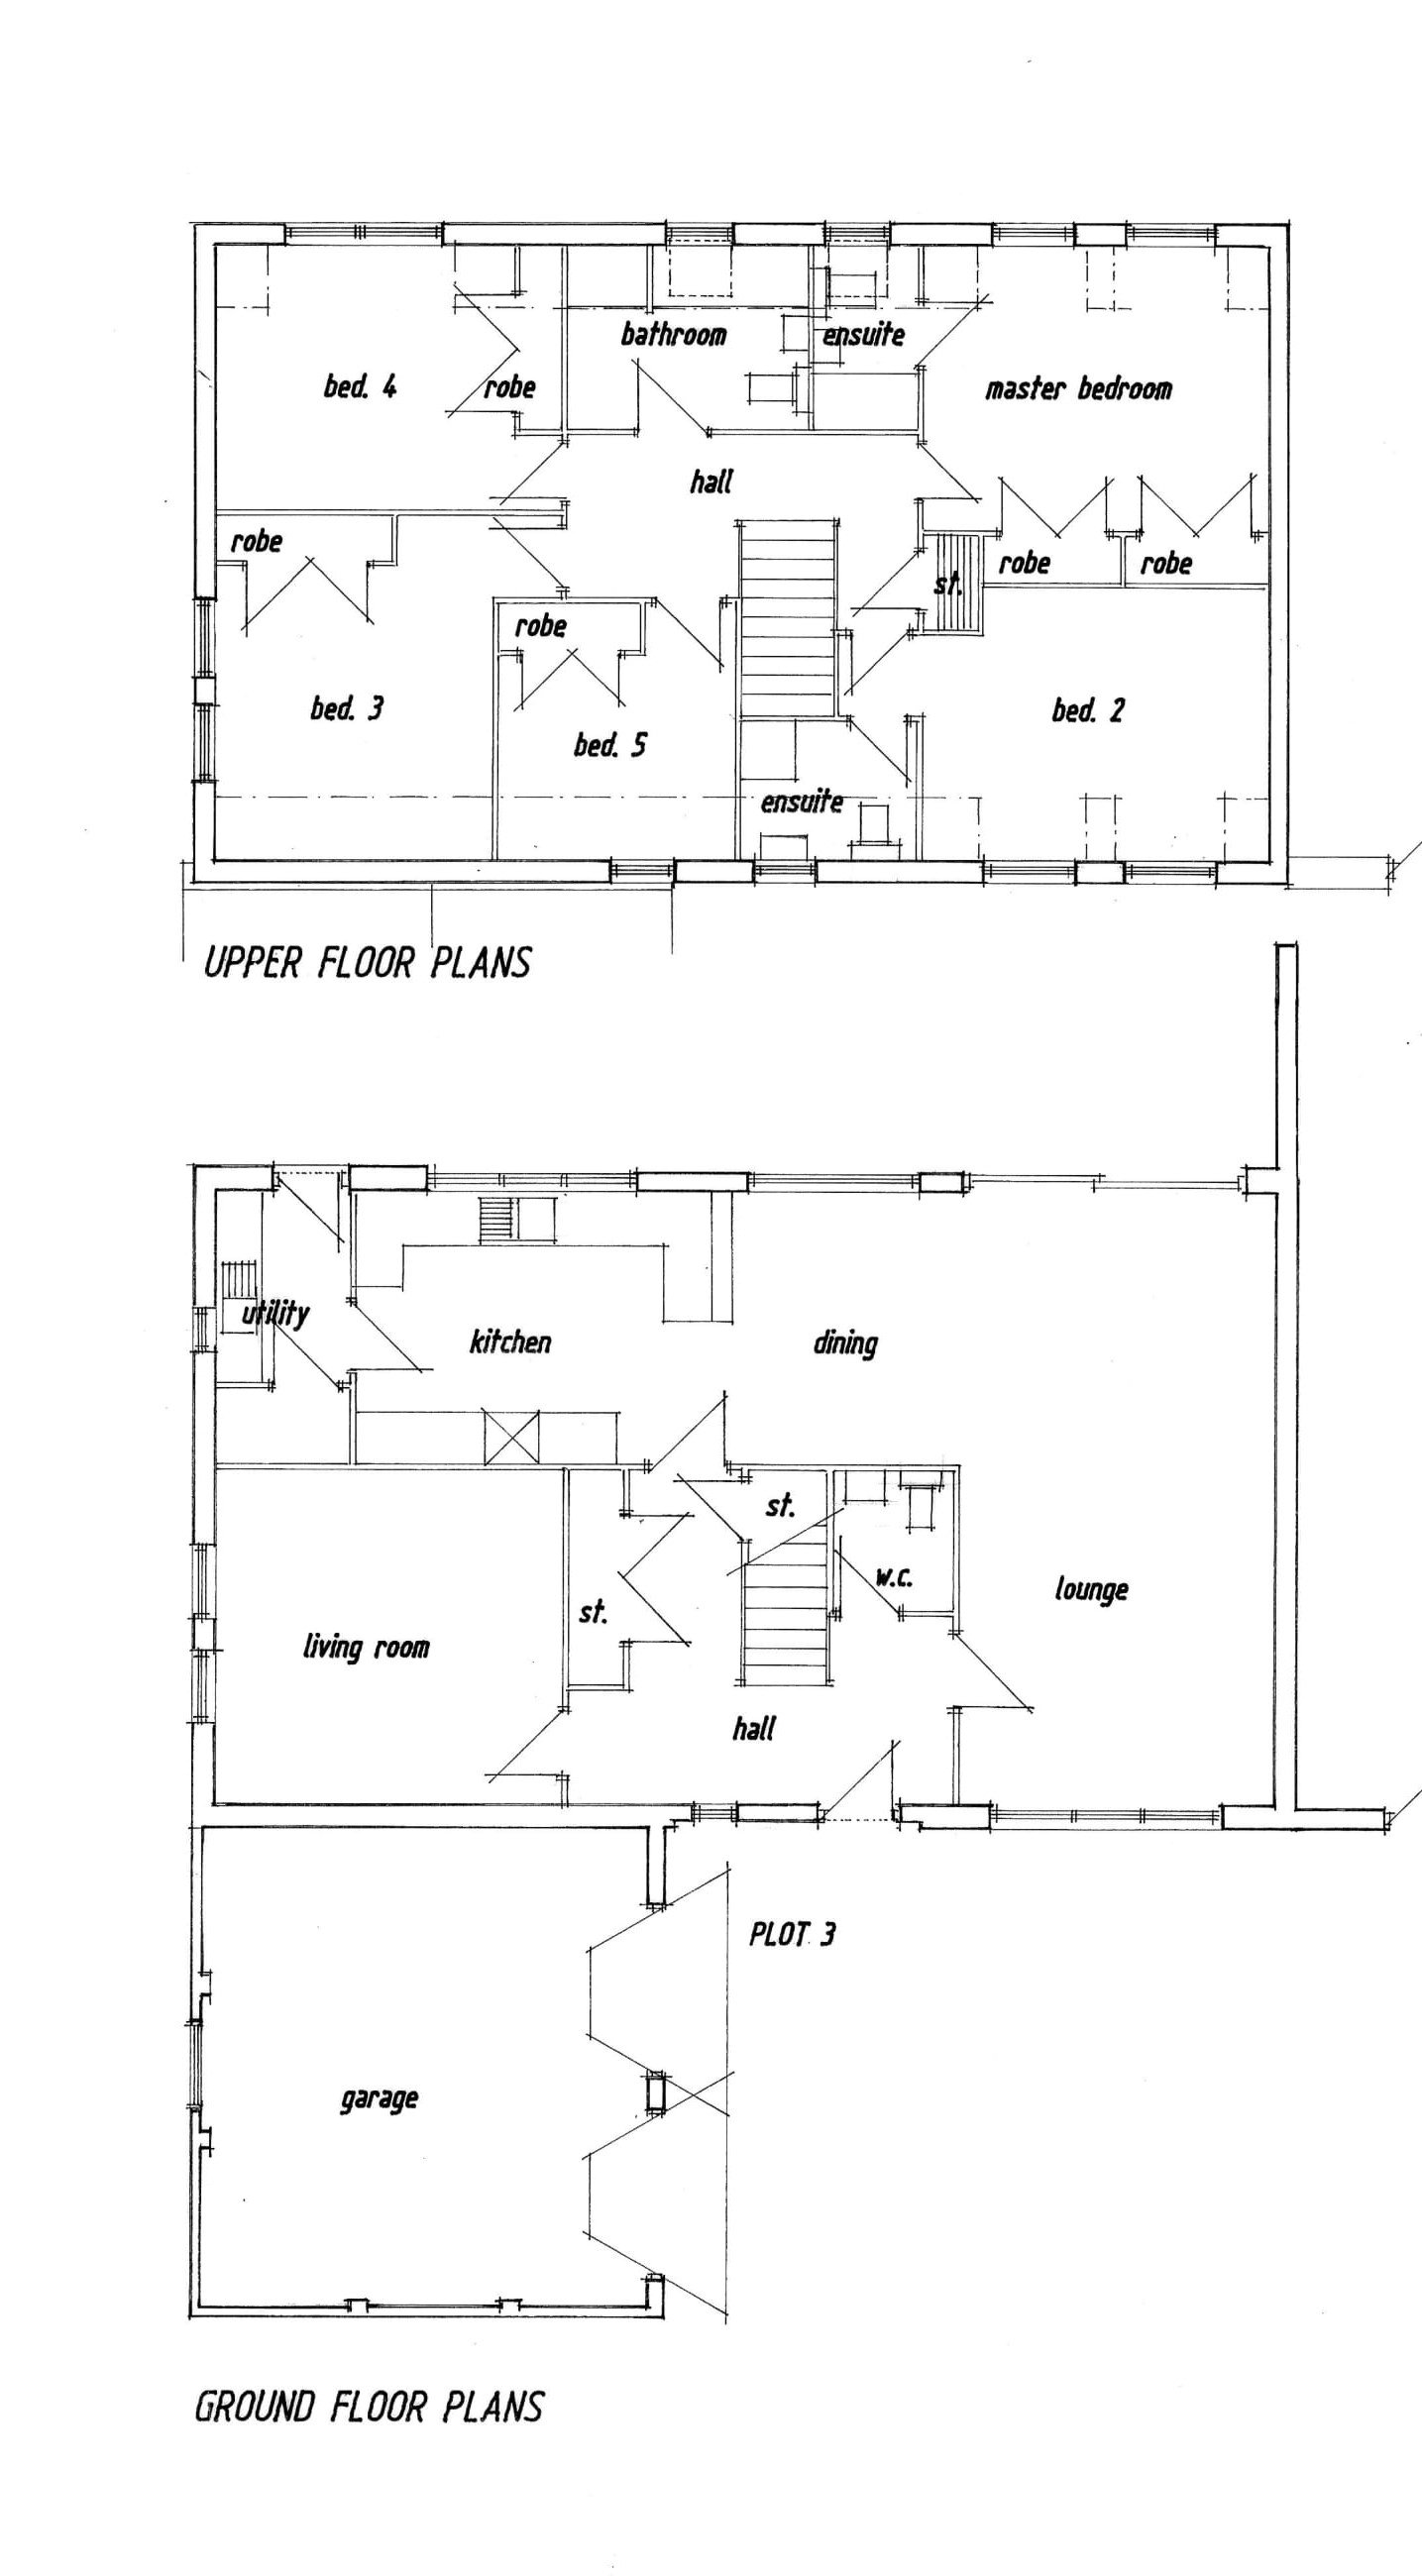 Plot 3 Floor Plans